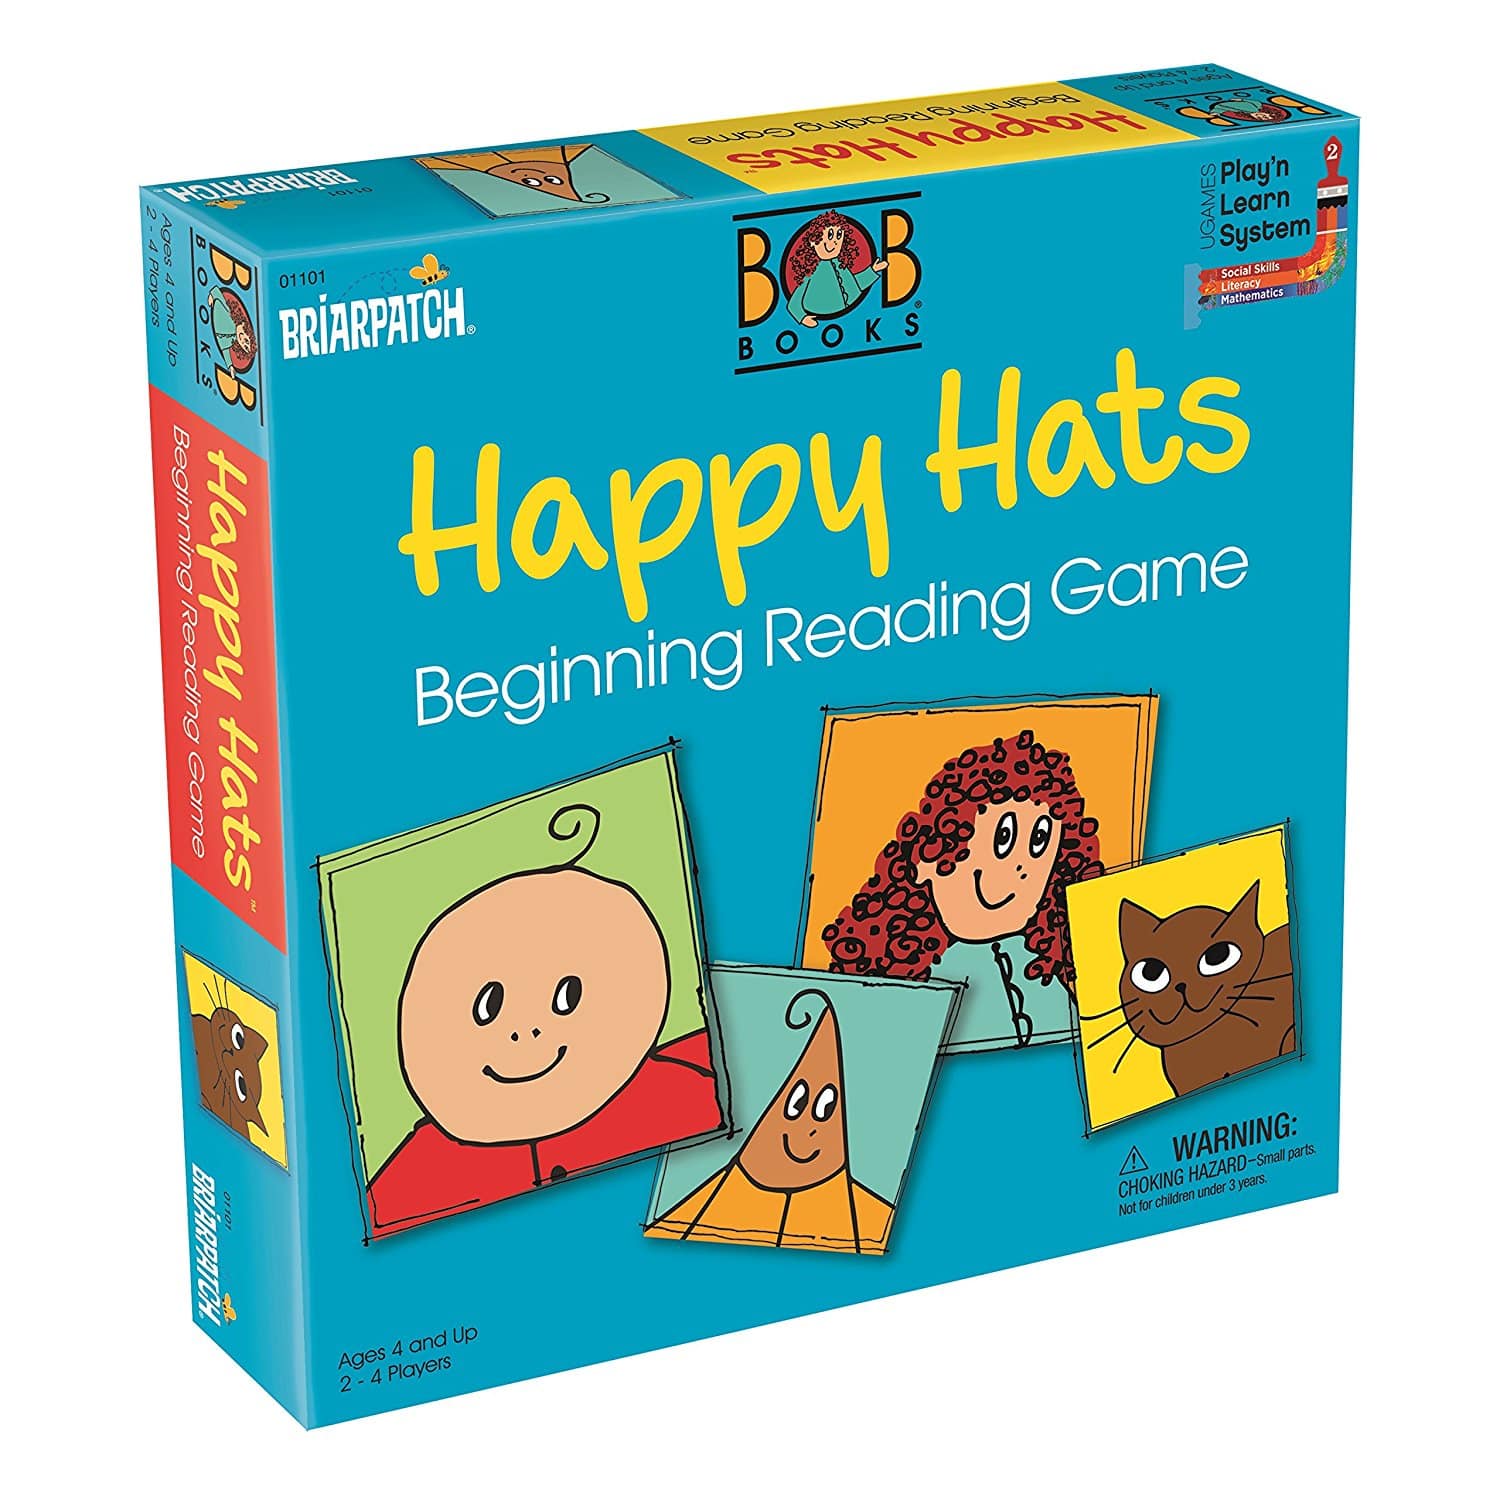 DEAL ALERT: Bob Books Happy Hats Beginning Reading Game Line – 60% off!